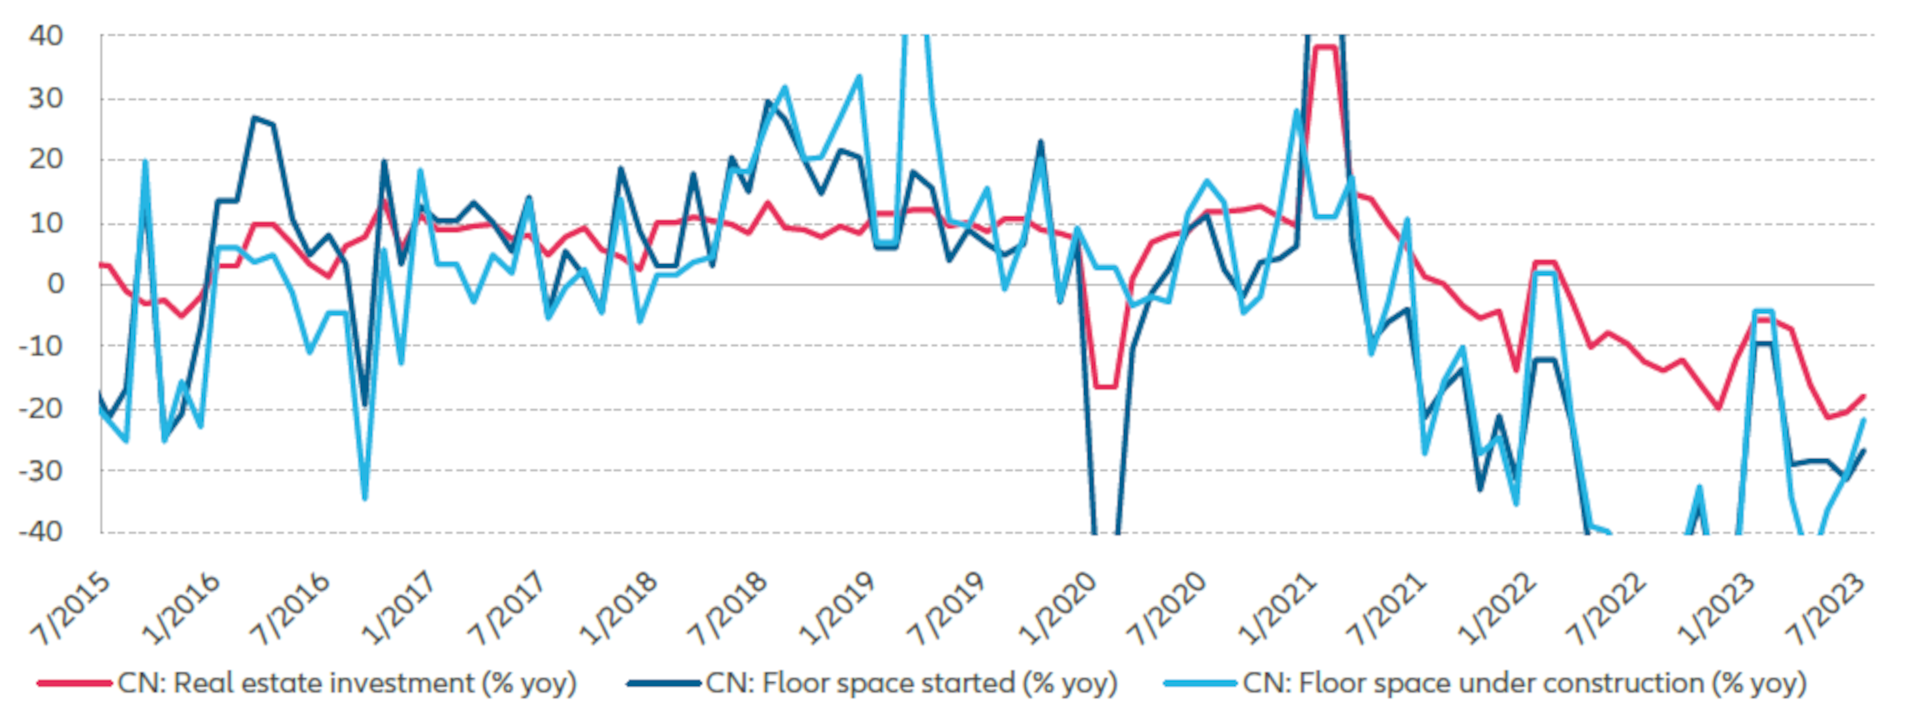 Exhibit 1: Activity in China’s property market has slowed dramatically